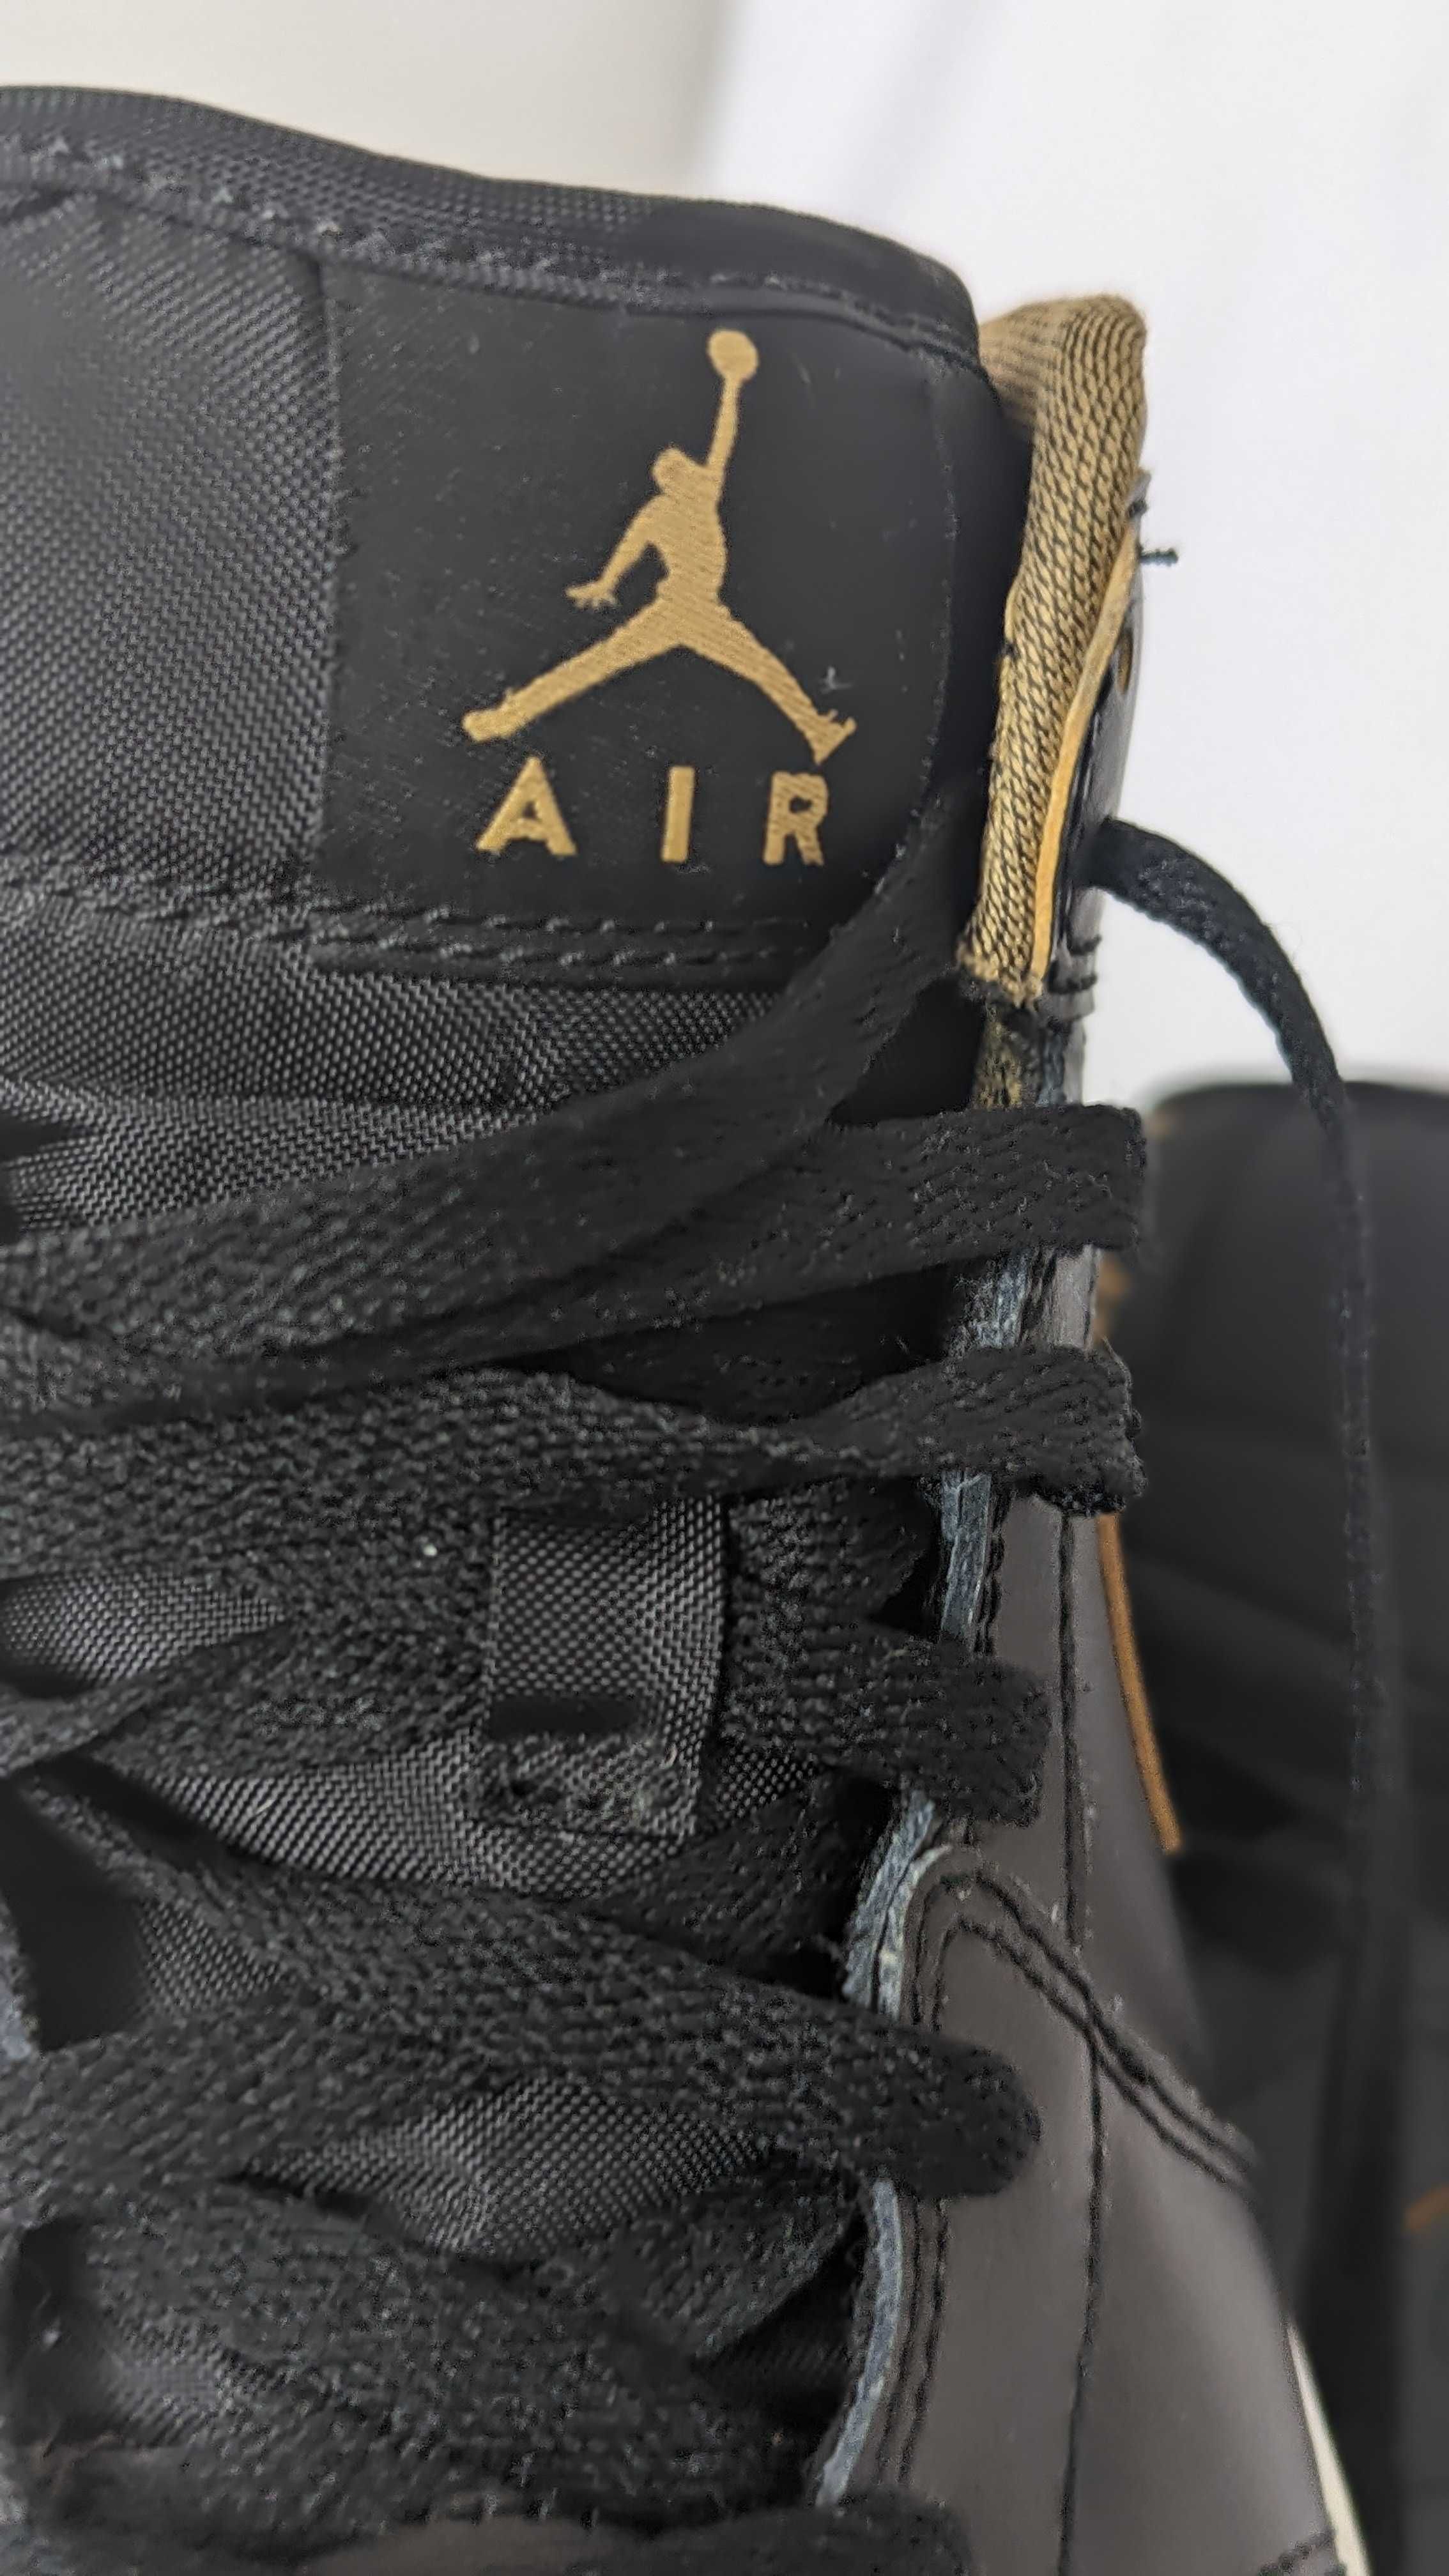 Air Jordan 1 Black Gold 2015 edition